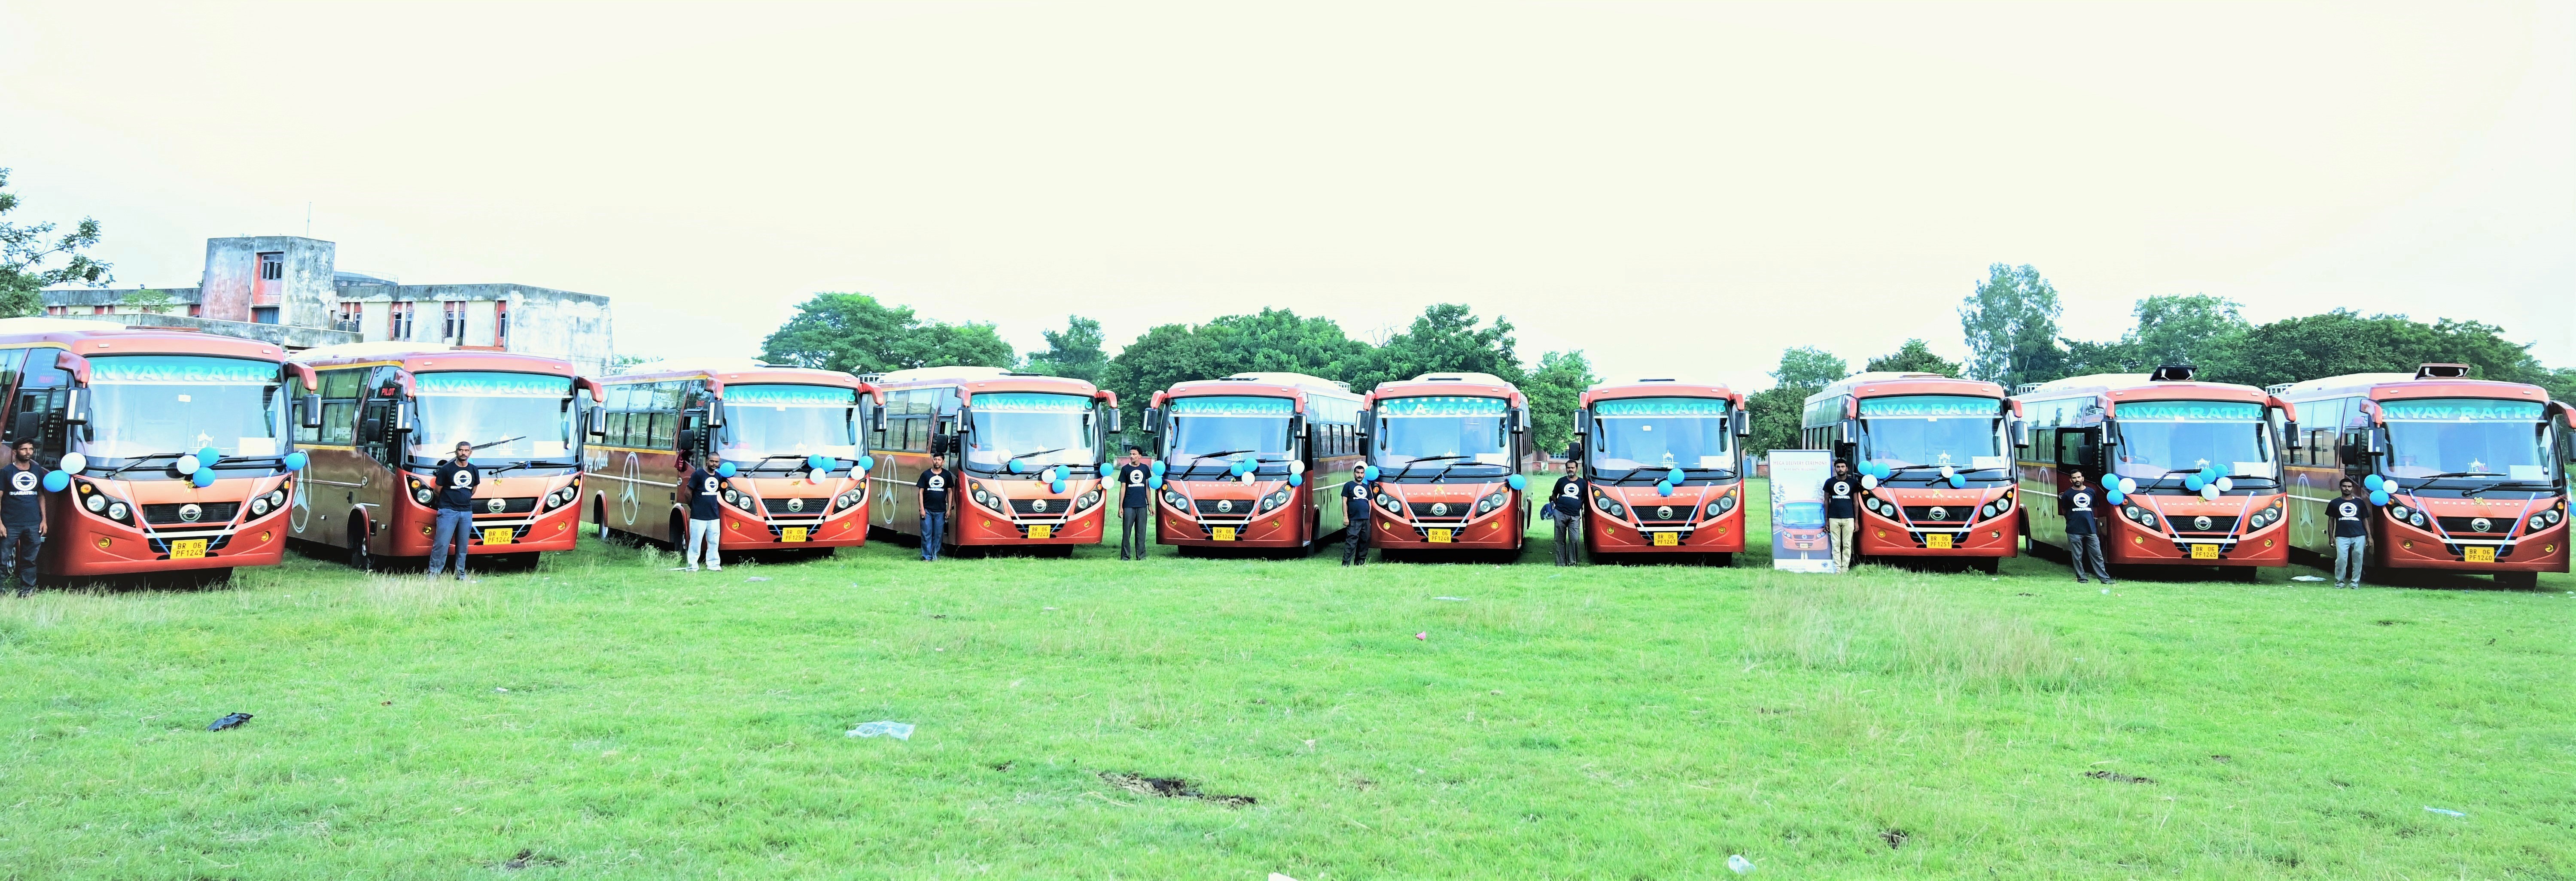 Bihar Bus Market Recovering: BharatBenz Delivers 20 Units